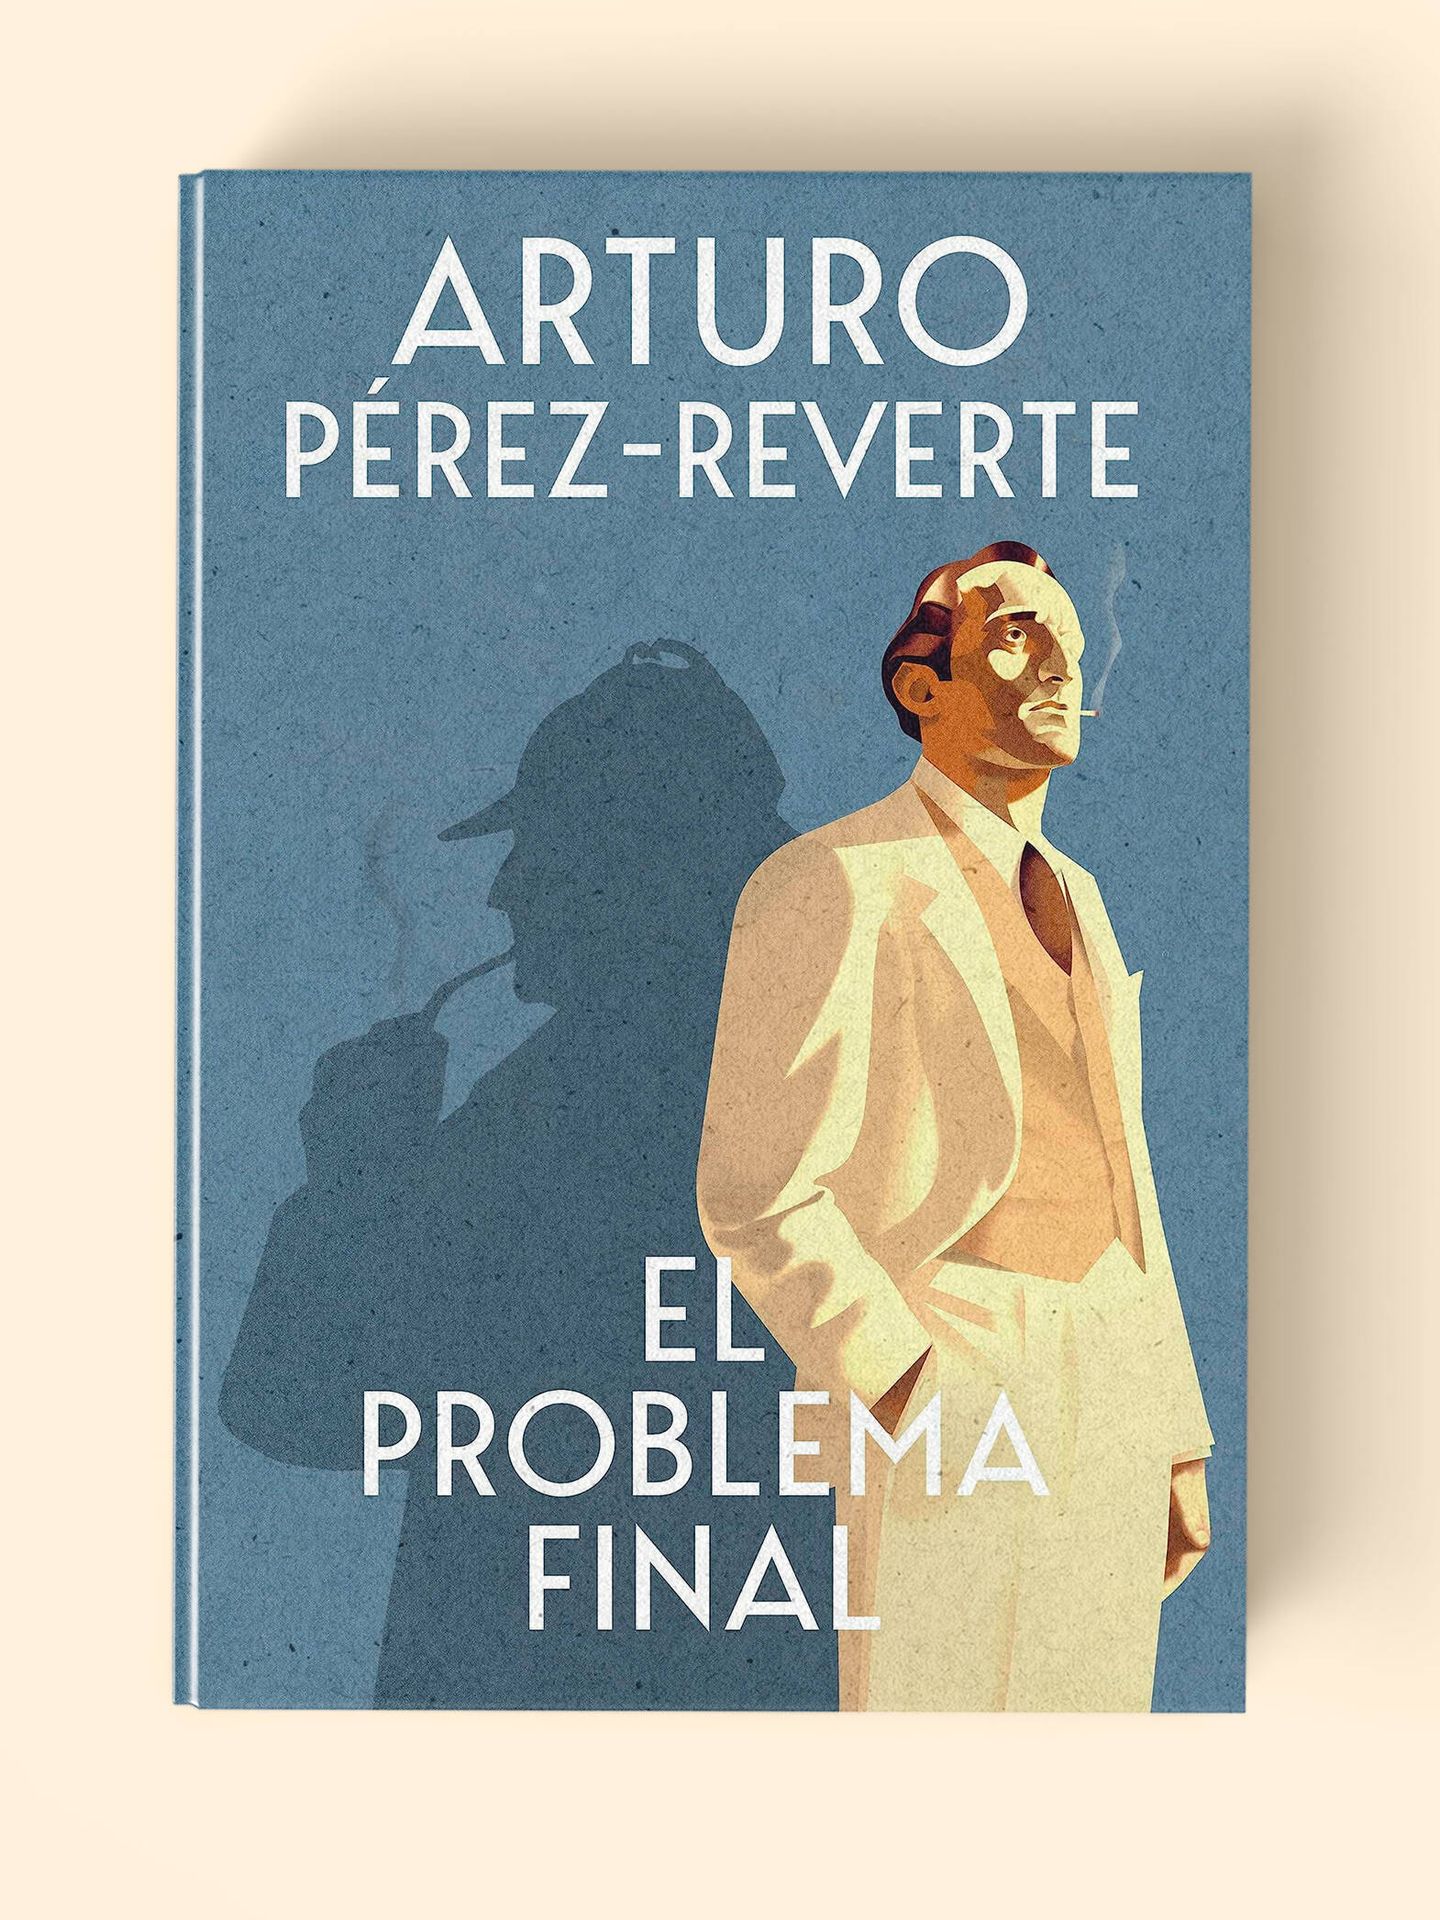 Portada de 'El problema final', la nueva novela de Arturo Pérez-Reverte.